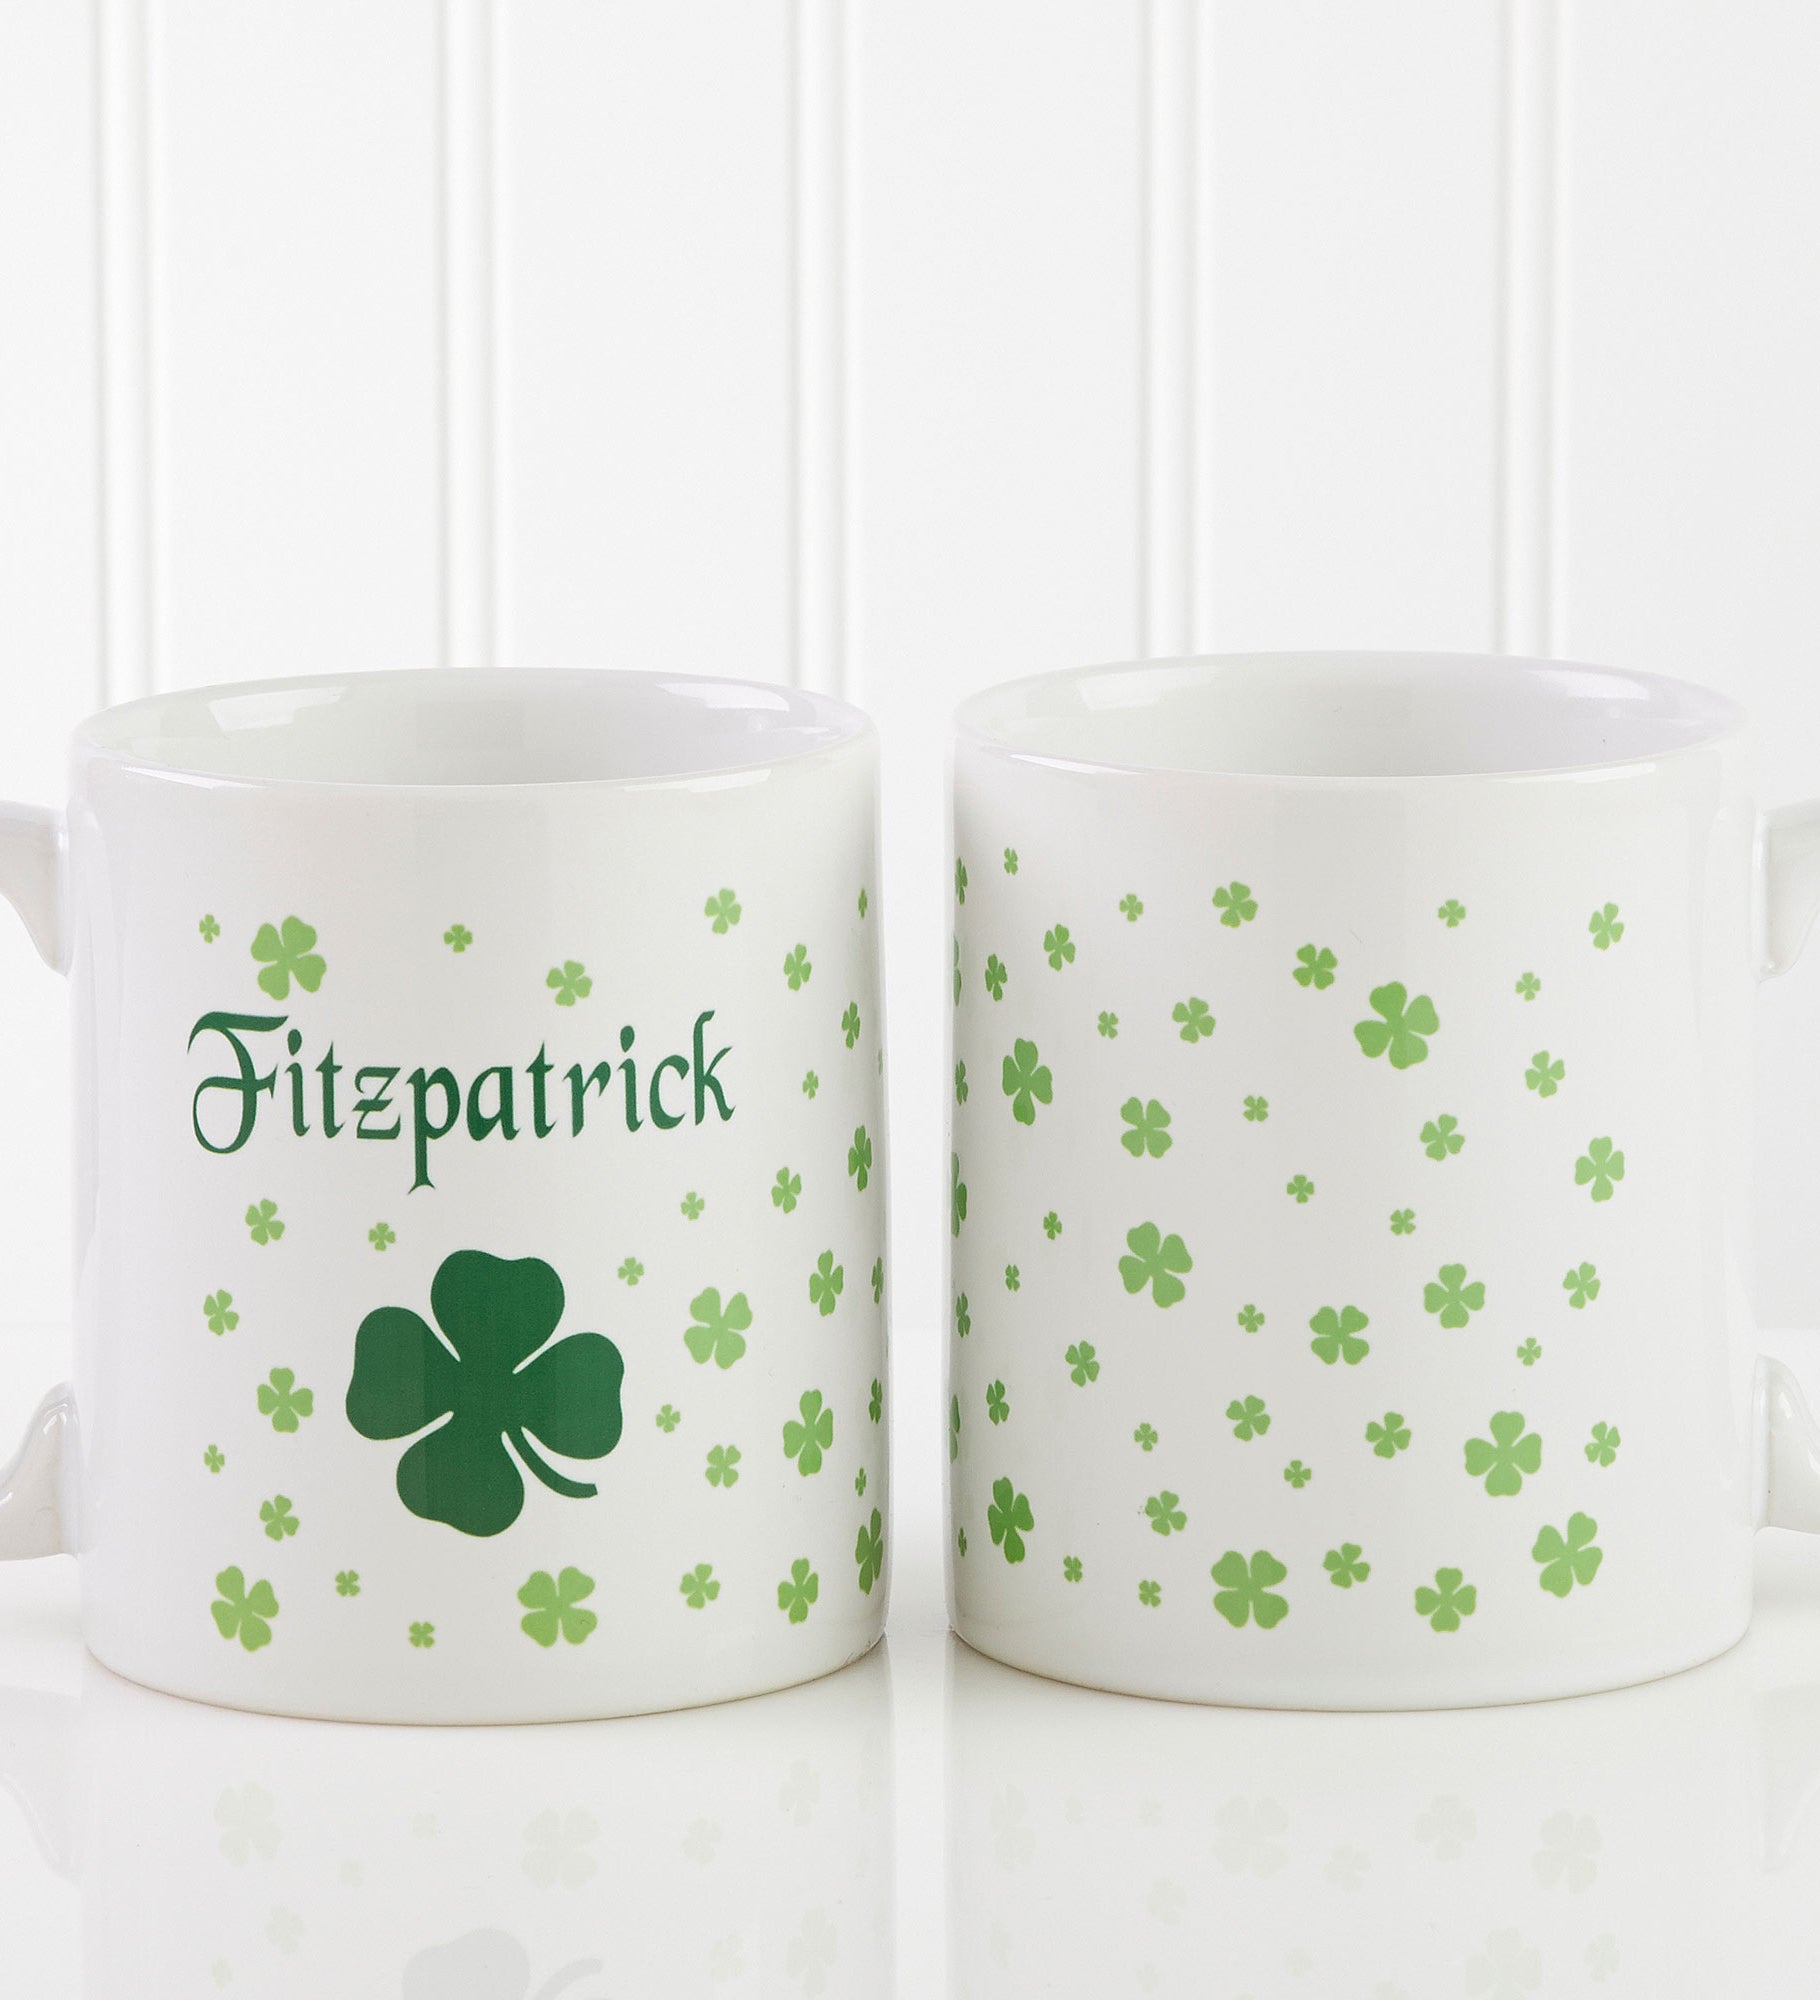 Irish Clover Personalized Coffee Mug